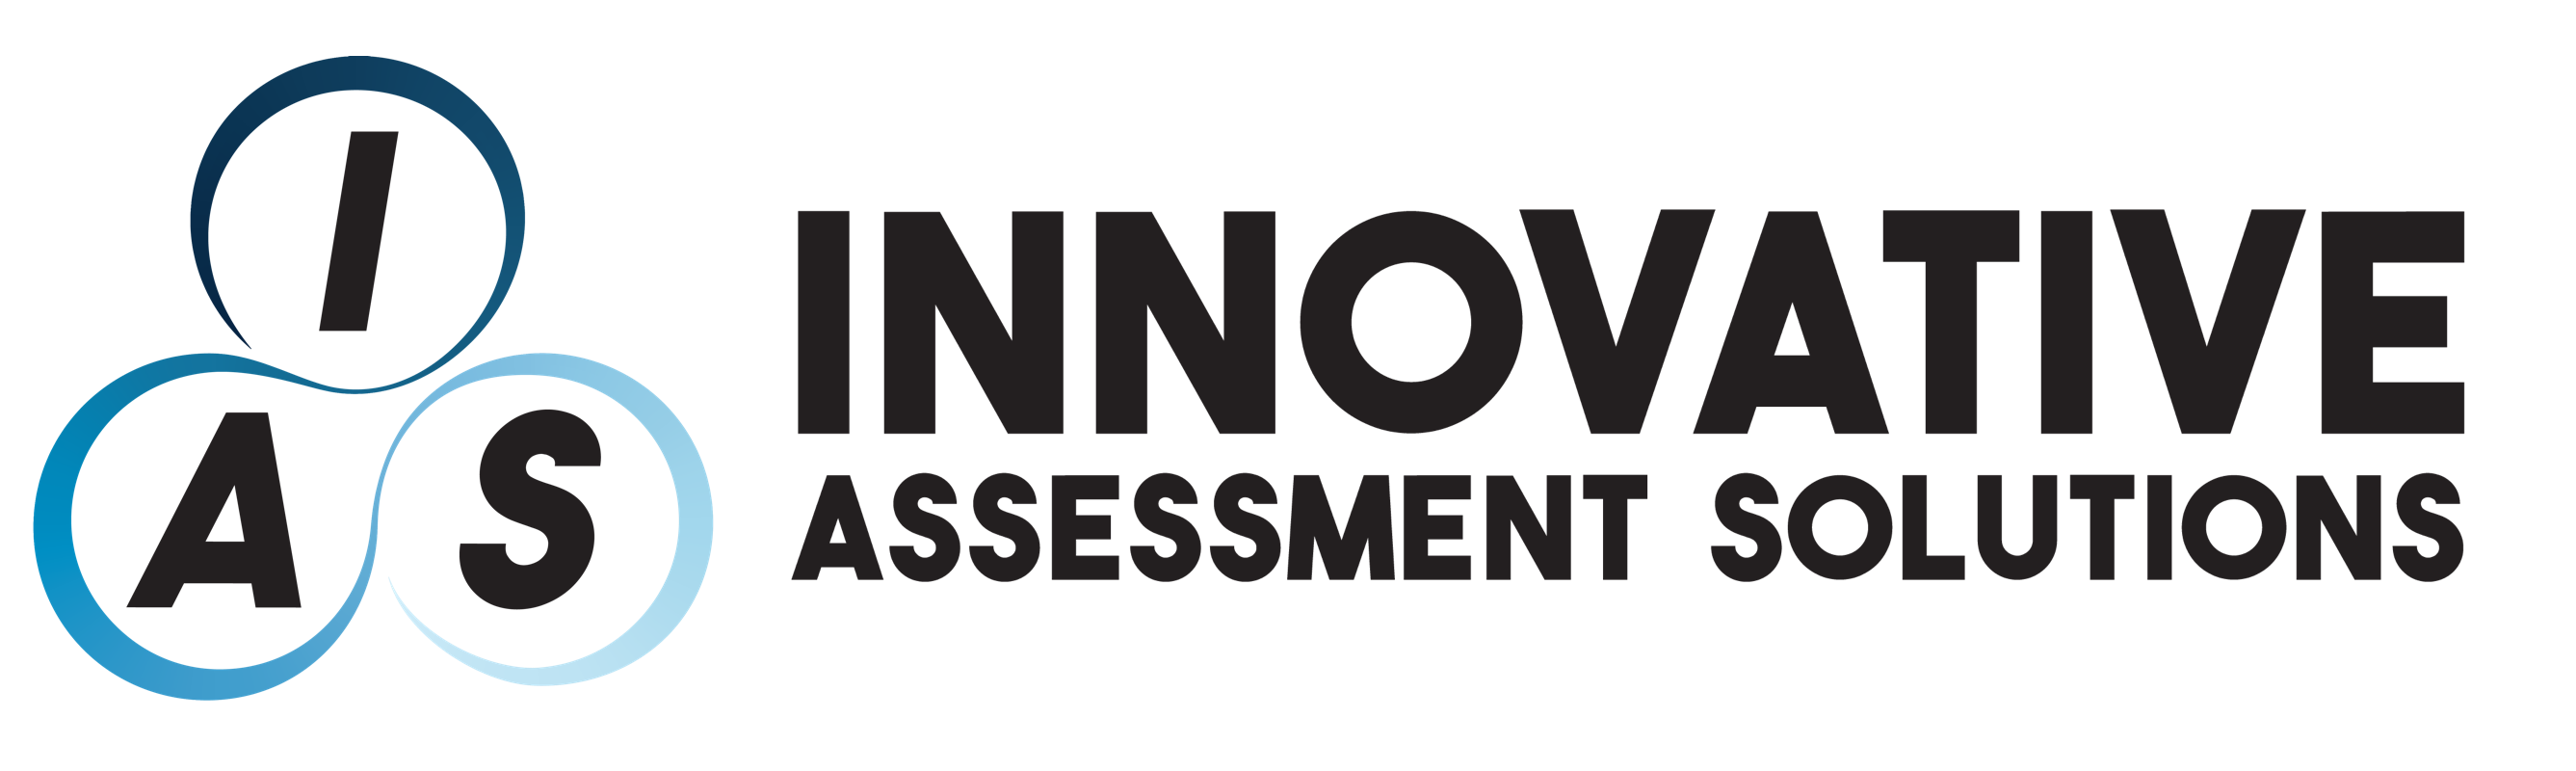 Innovative Assessment Solutions